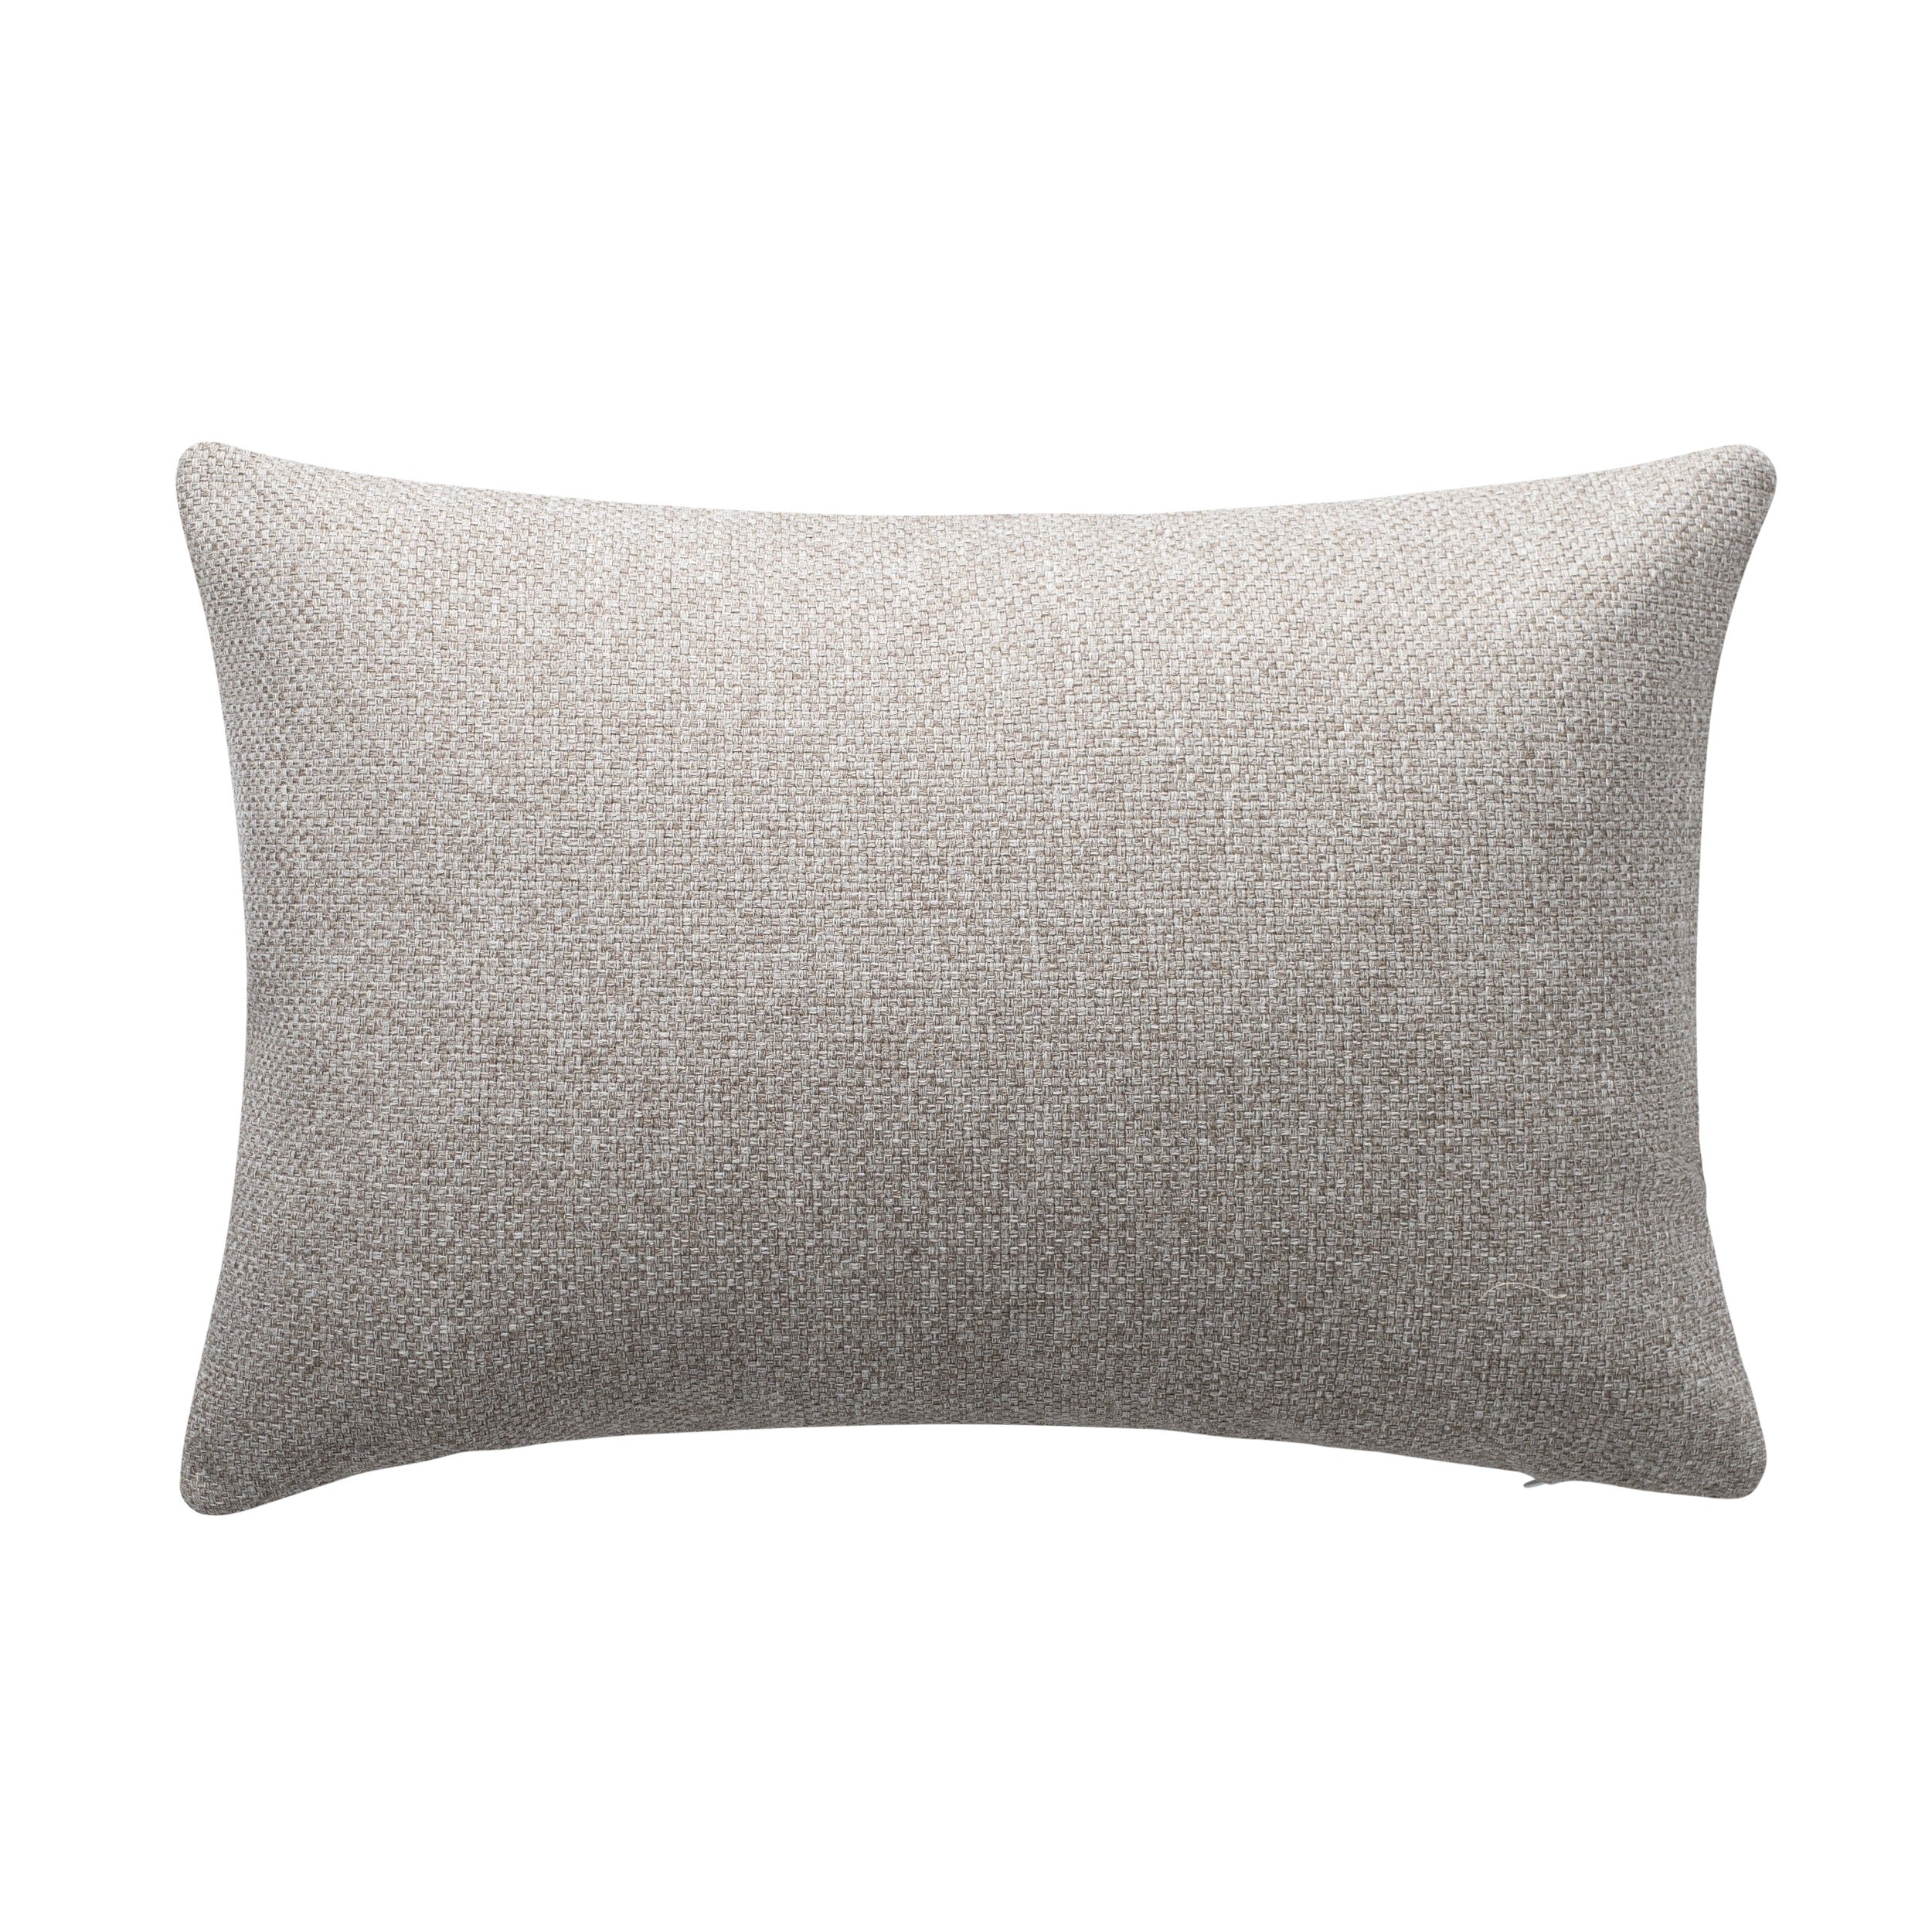 Aura Home Pigeon Grey Textured Throw Pillow